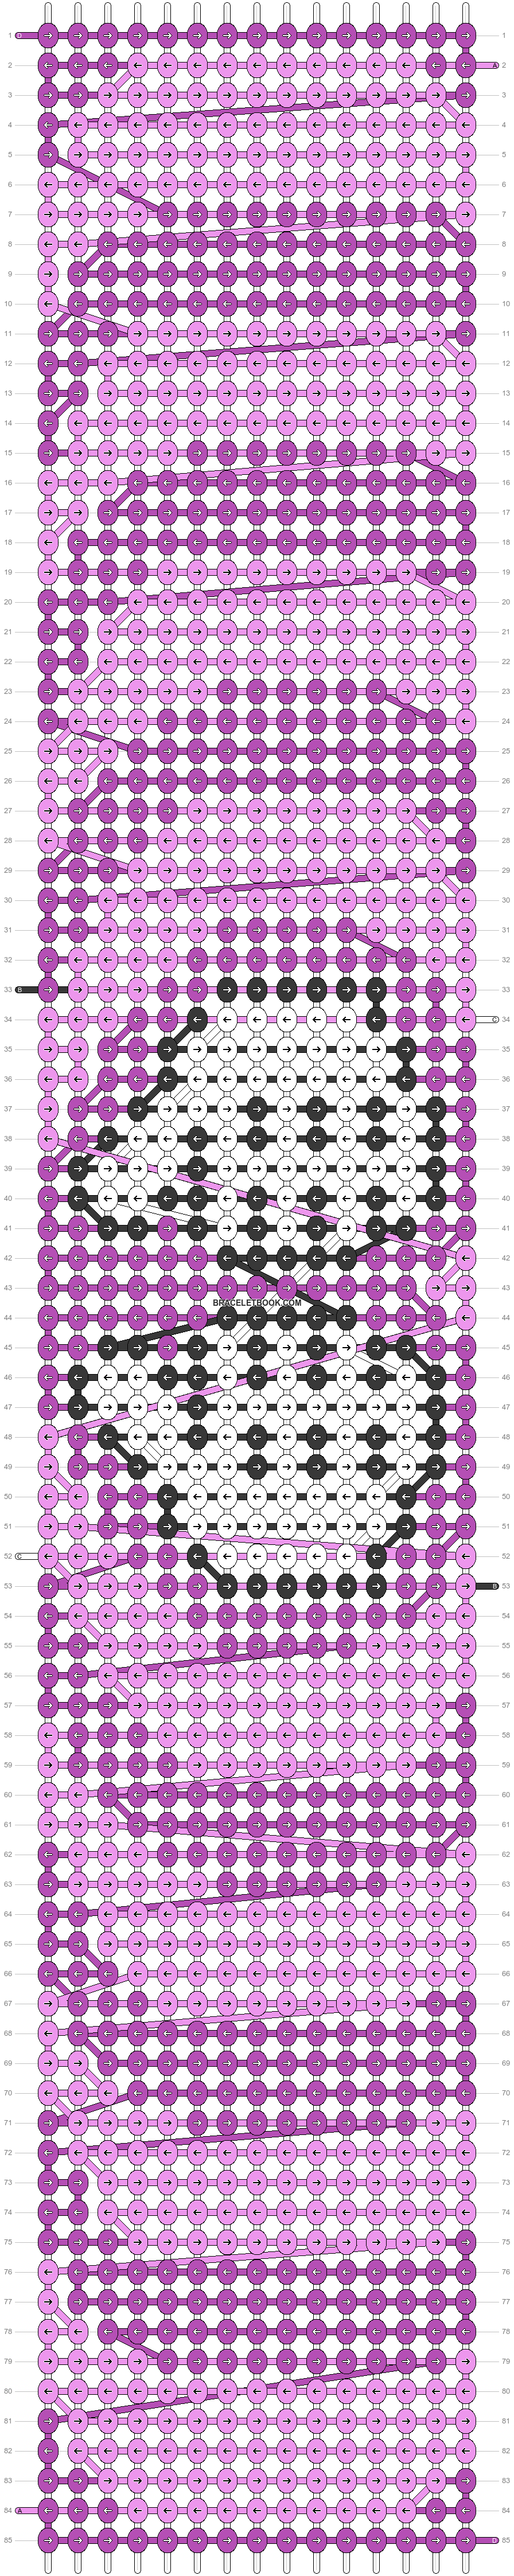 Alpha pattern #97391 pattern